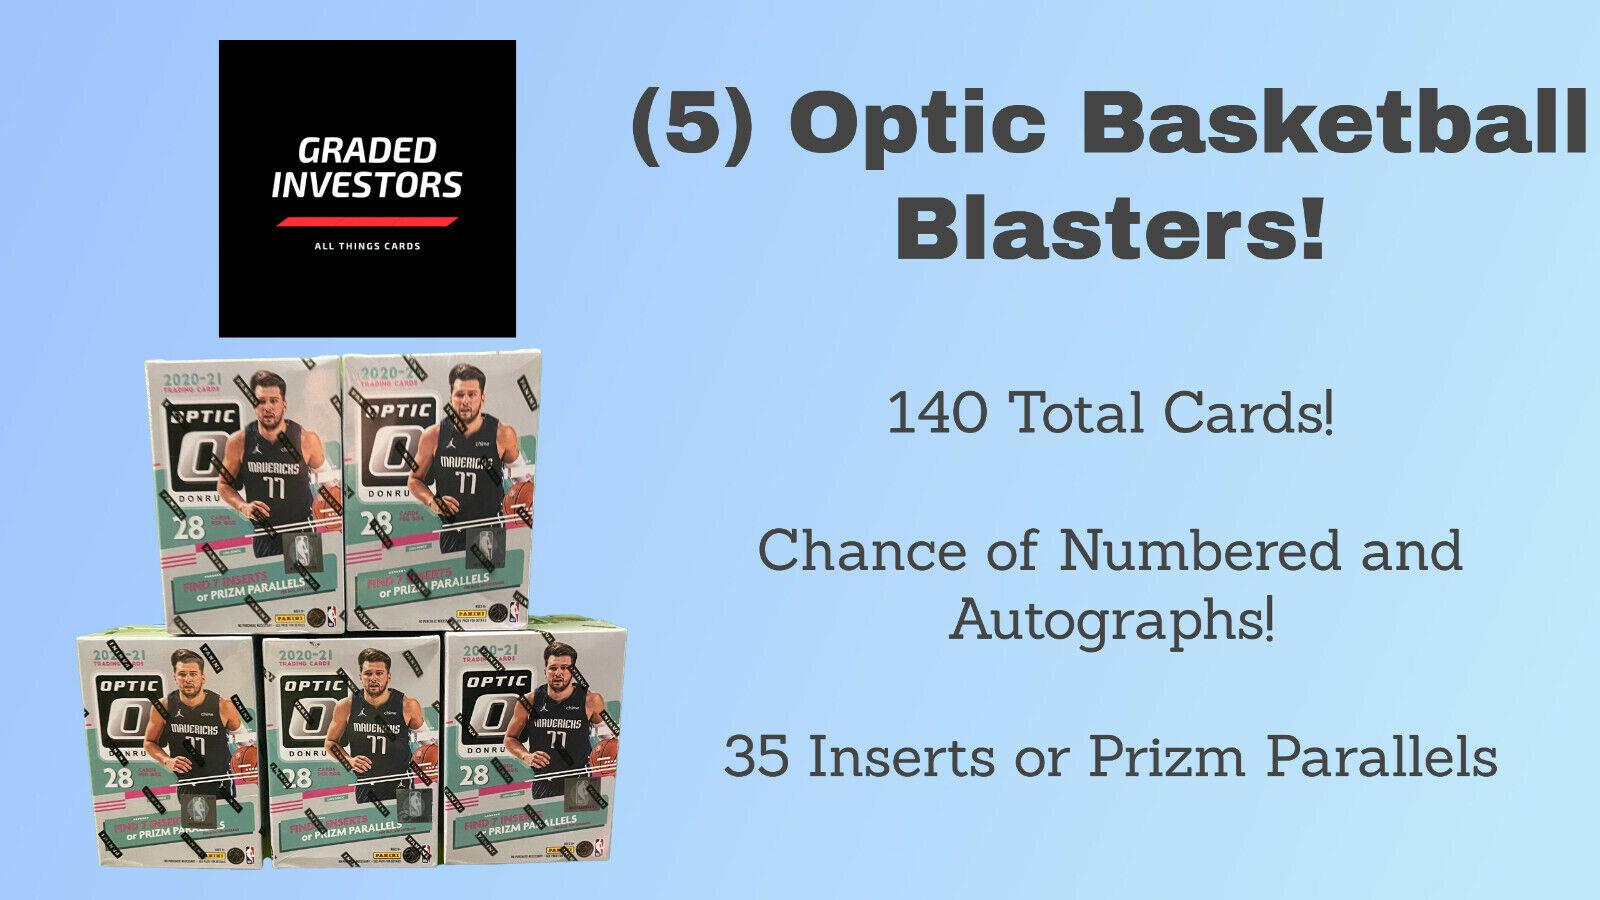 New York Knicks (5) 2020-21 Optic Basketball Blasters Live Break Obi Toppin